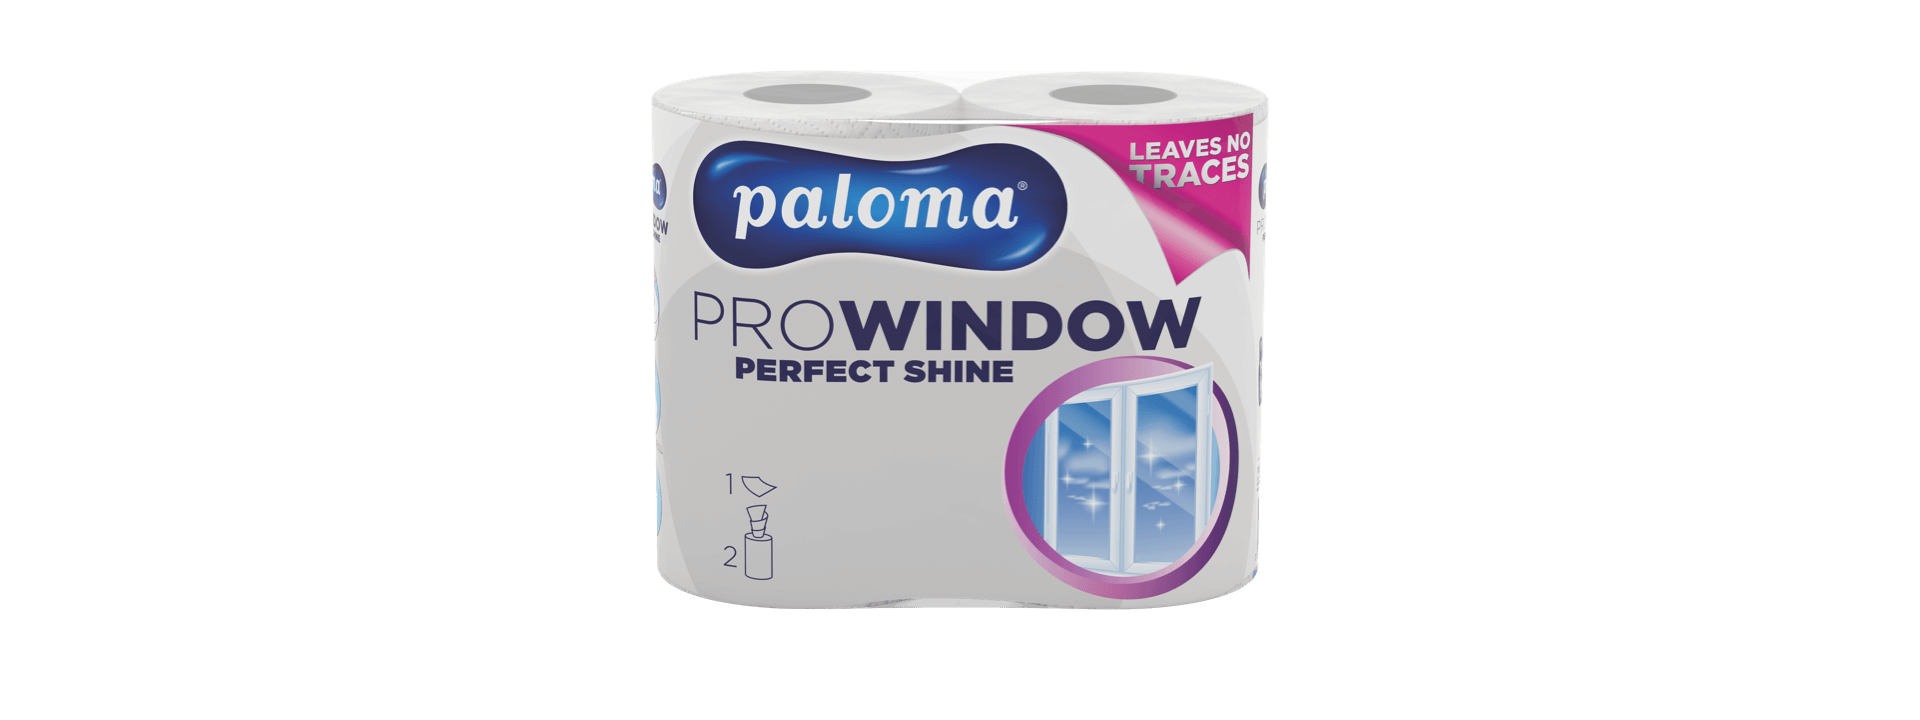 Paloma Pro Window